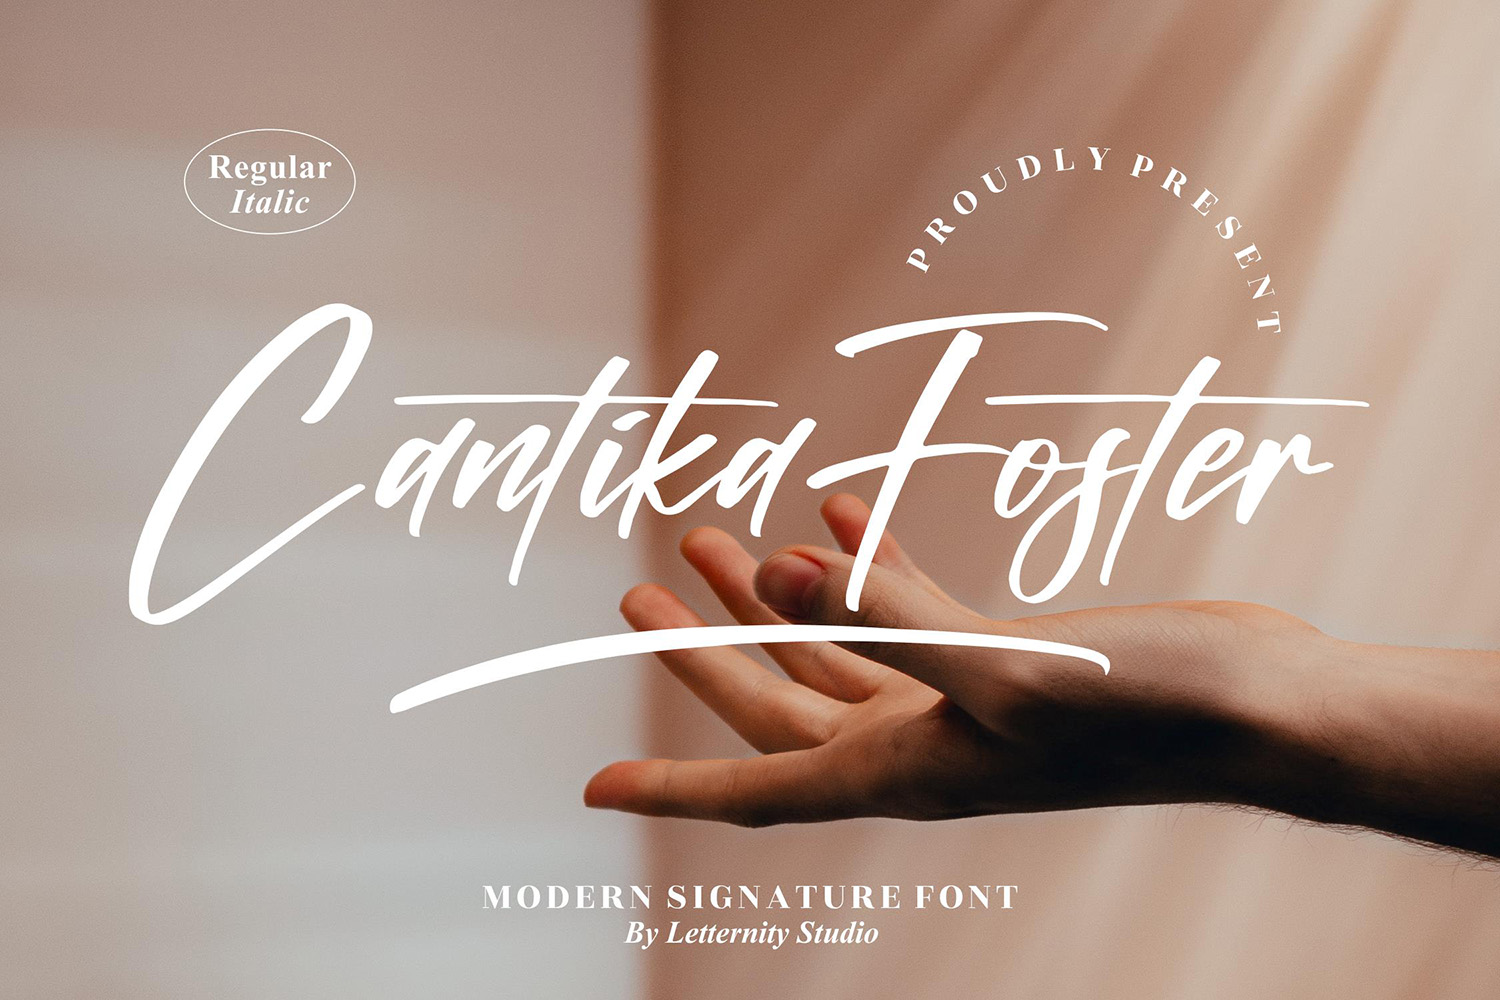 Cantika Foster Free Font